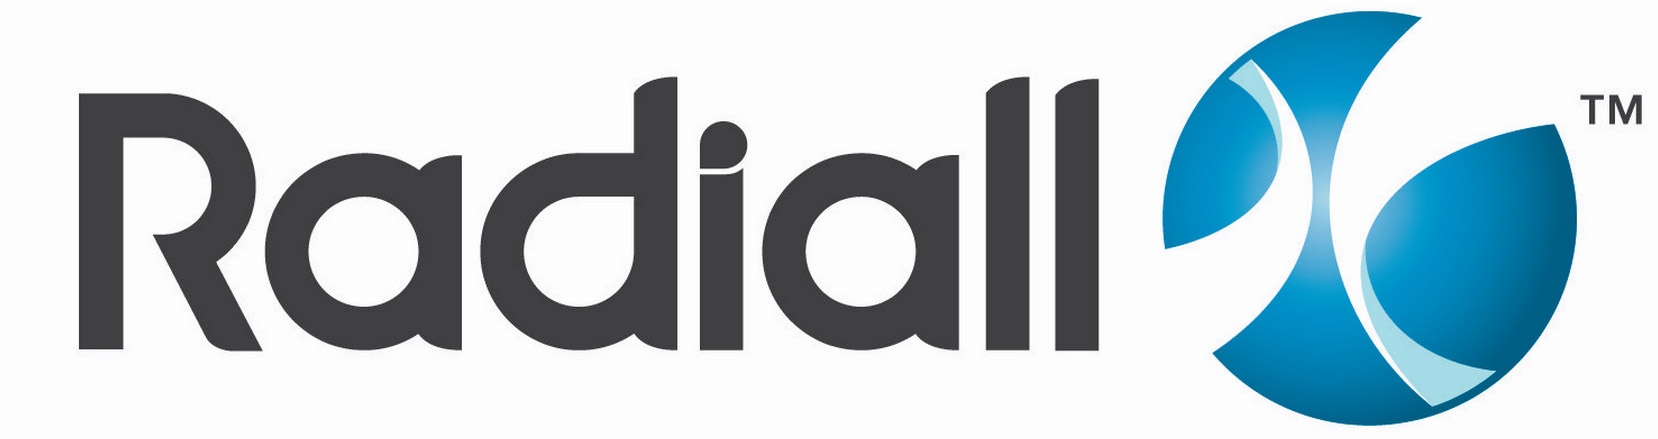 logo radiall